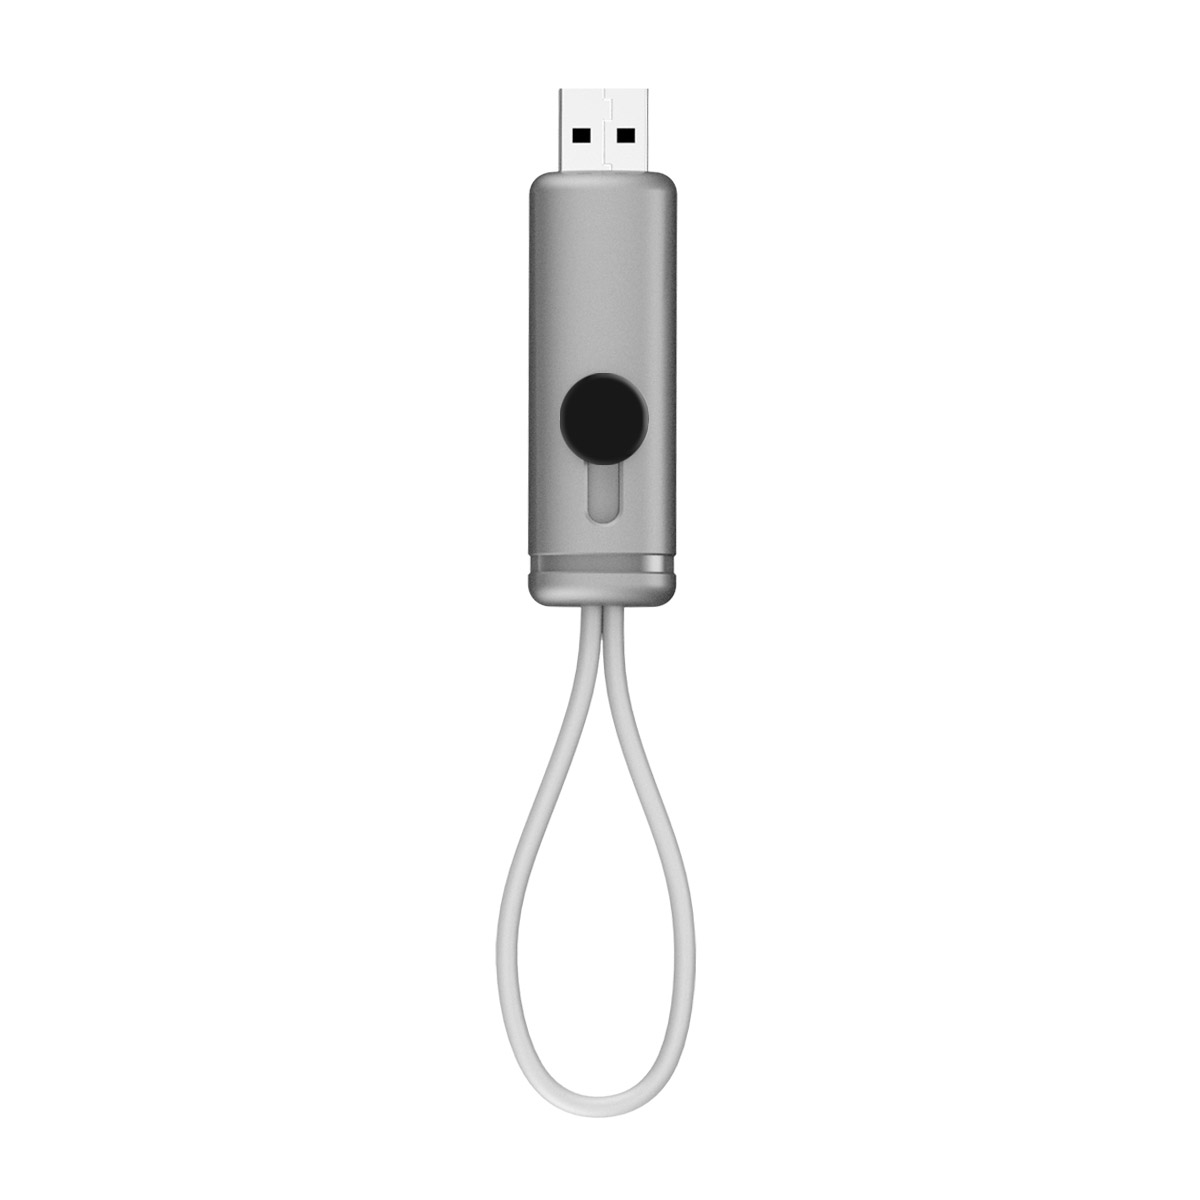 CC1708 - USB GRENOBLE 16 GB